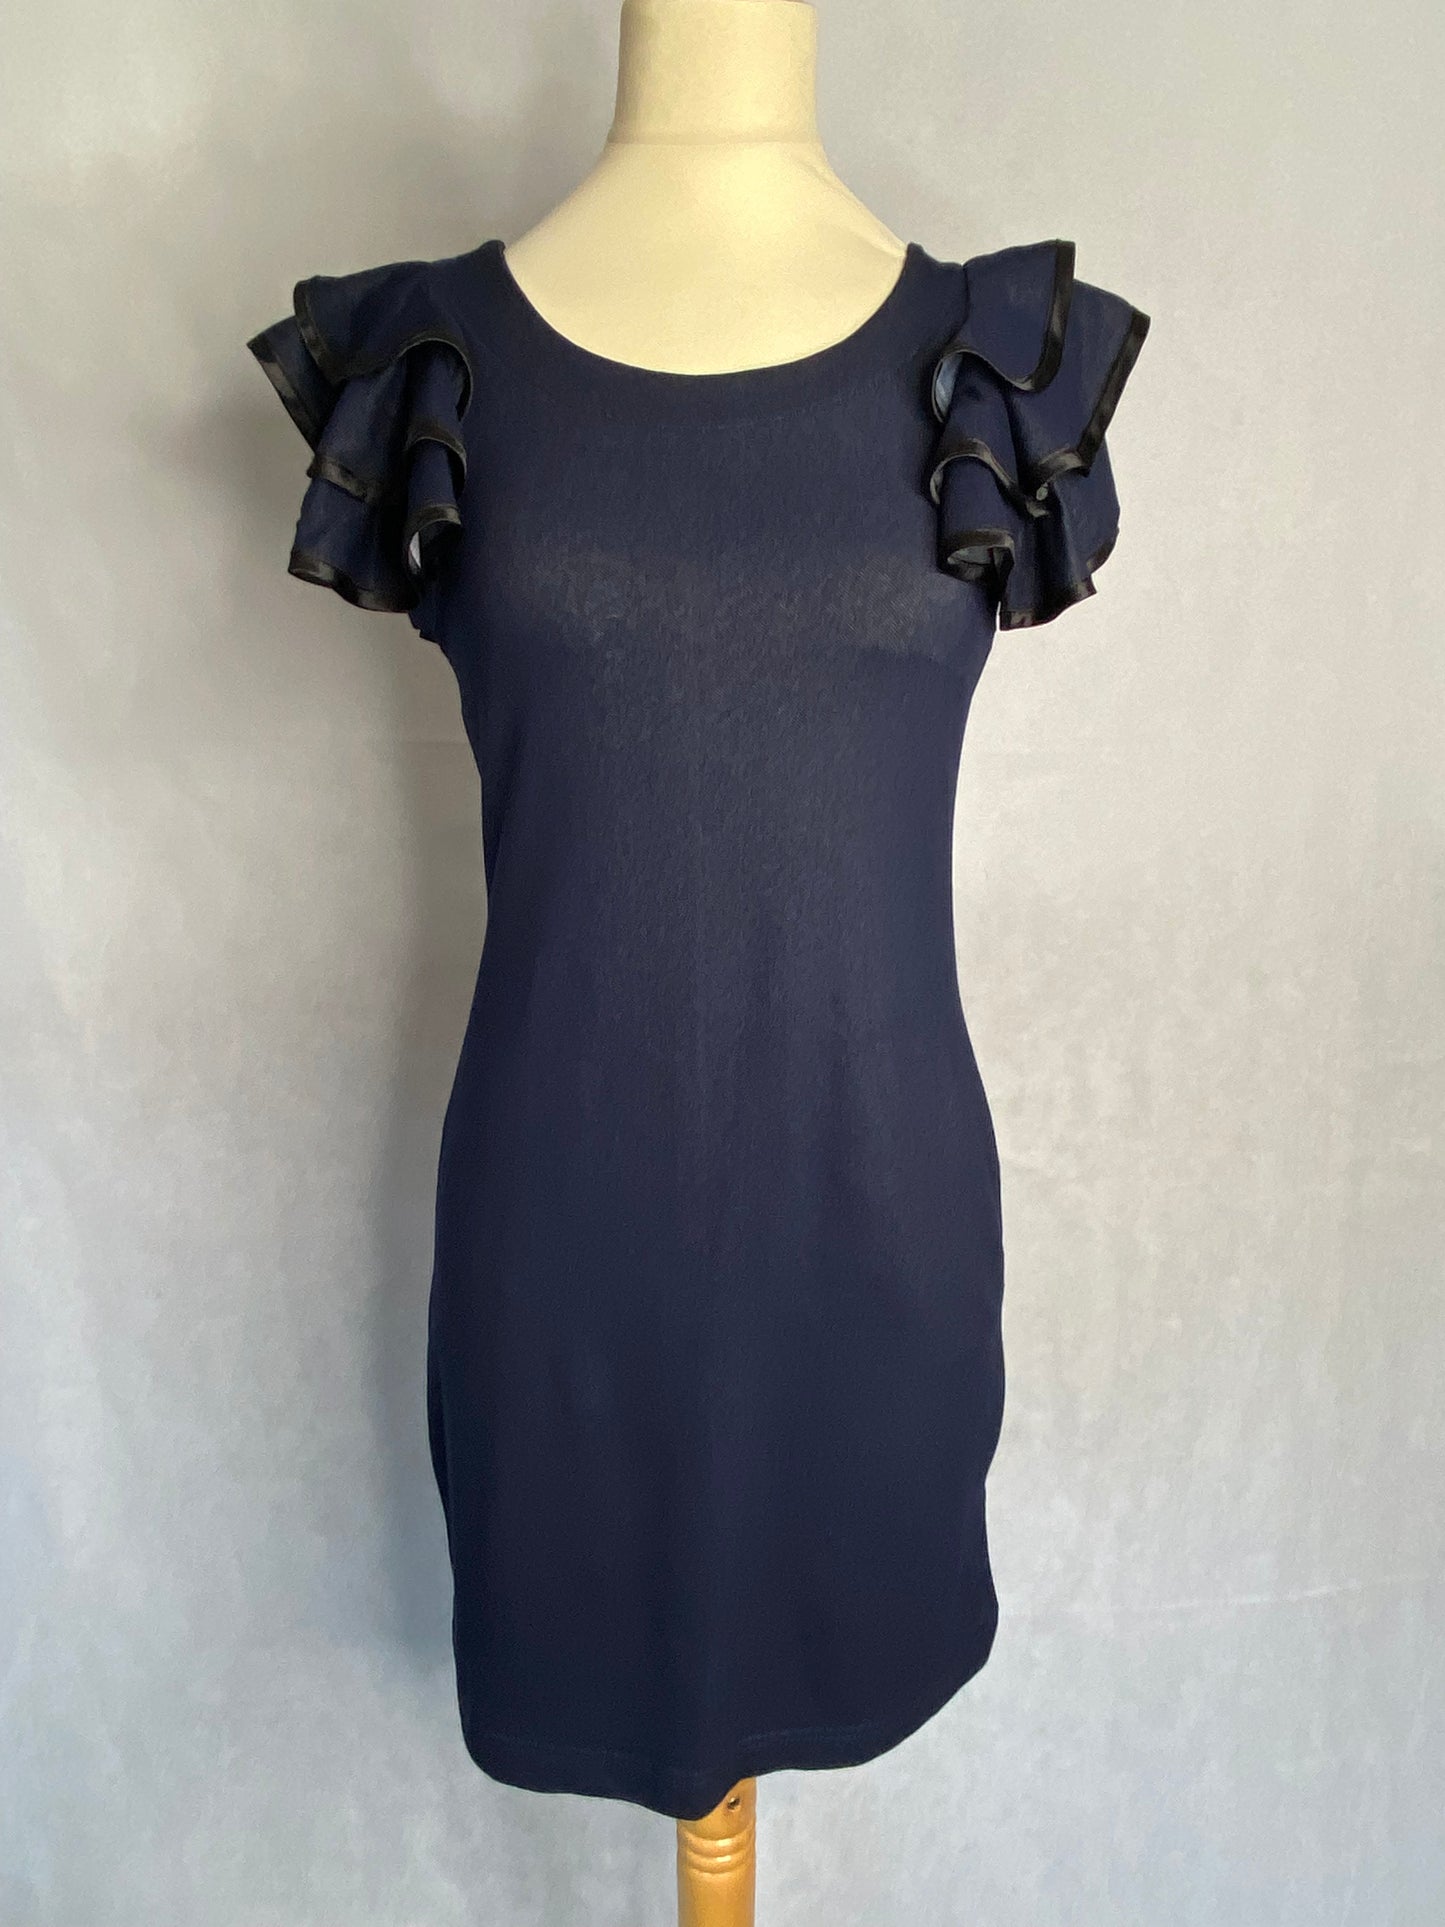 TSEGA - M/10 - Blue Frill sleeve stretch mini dress